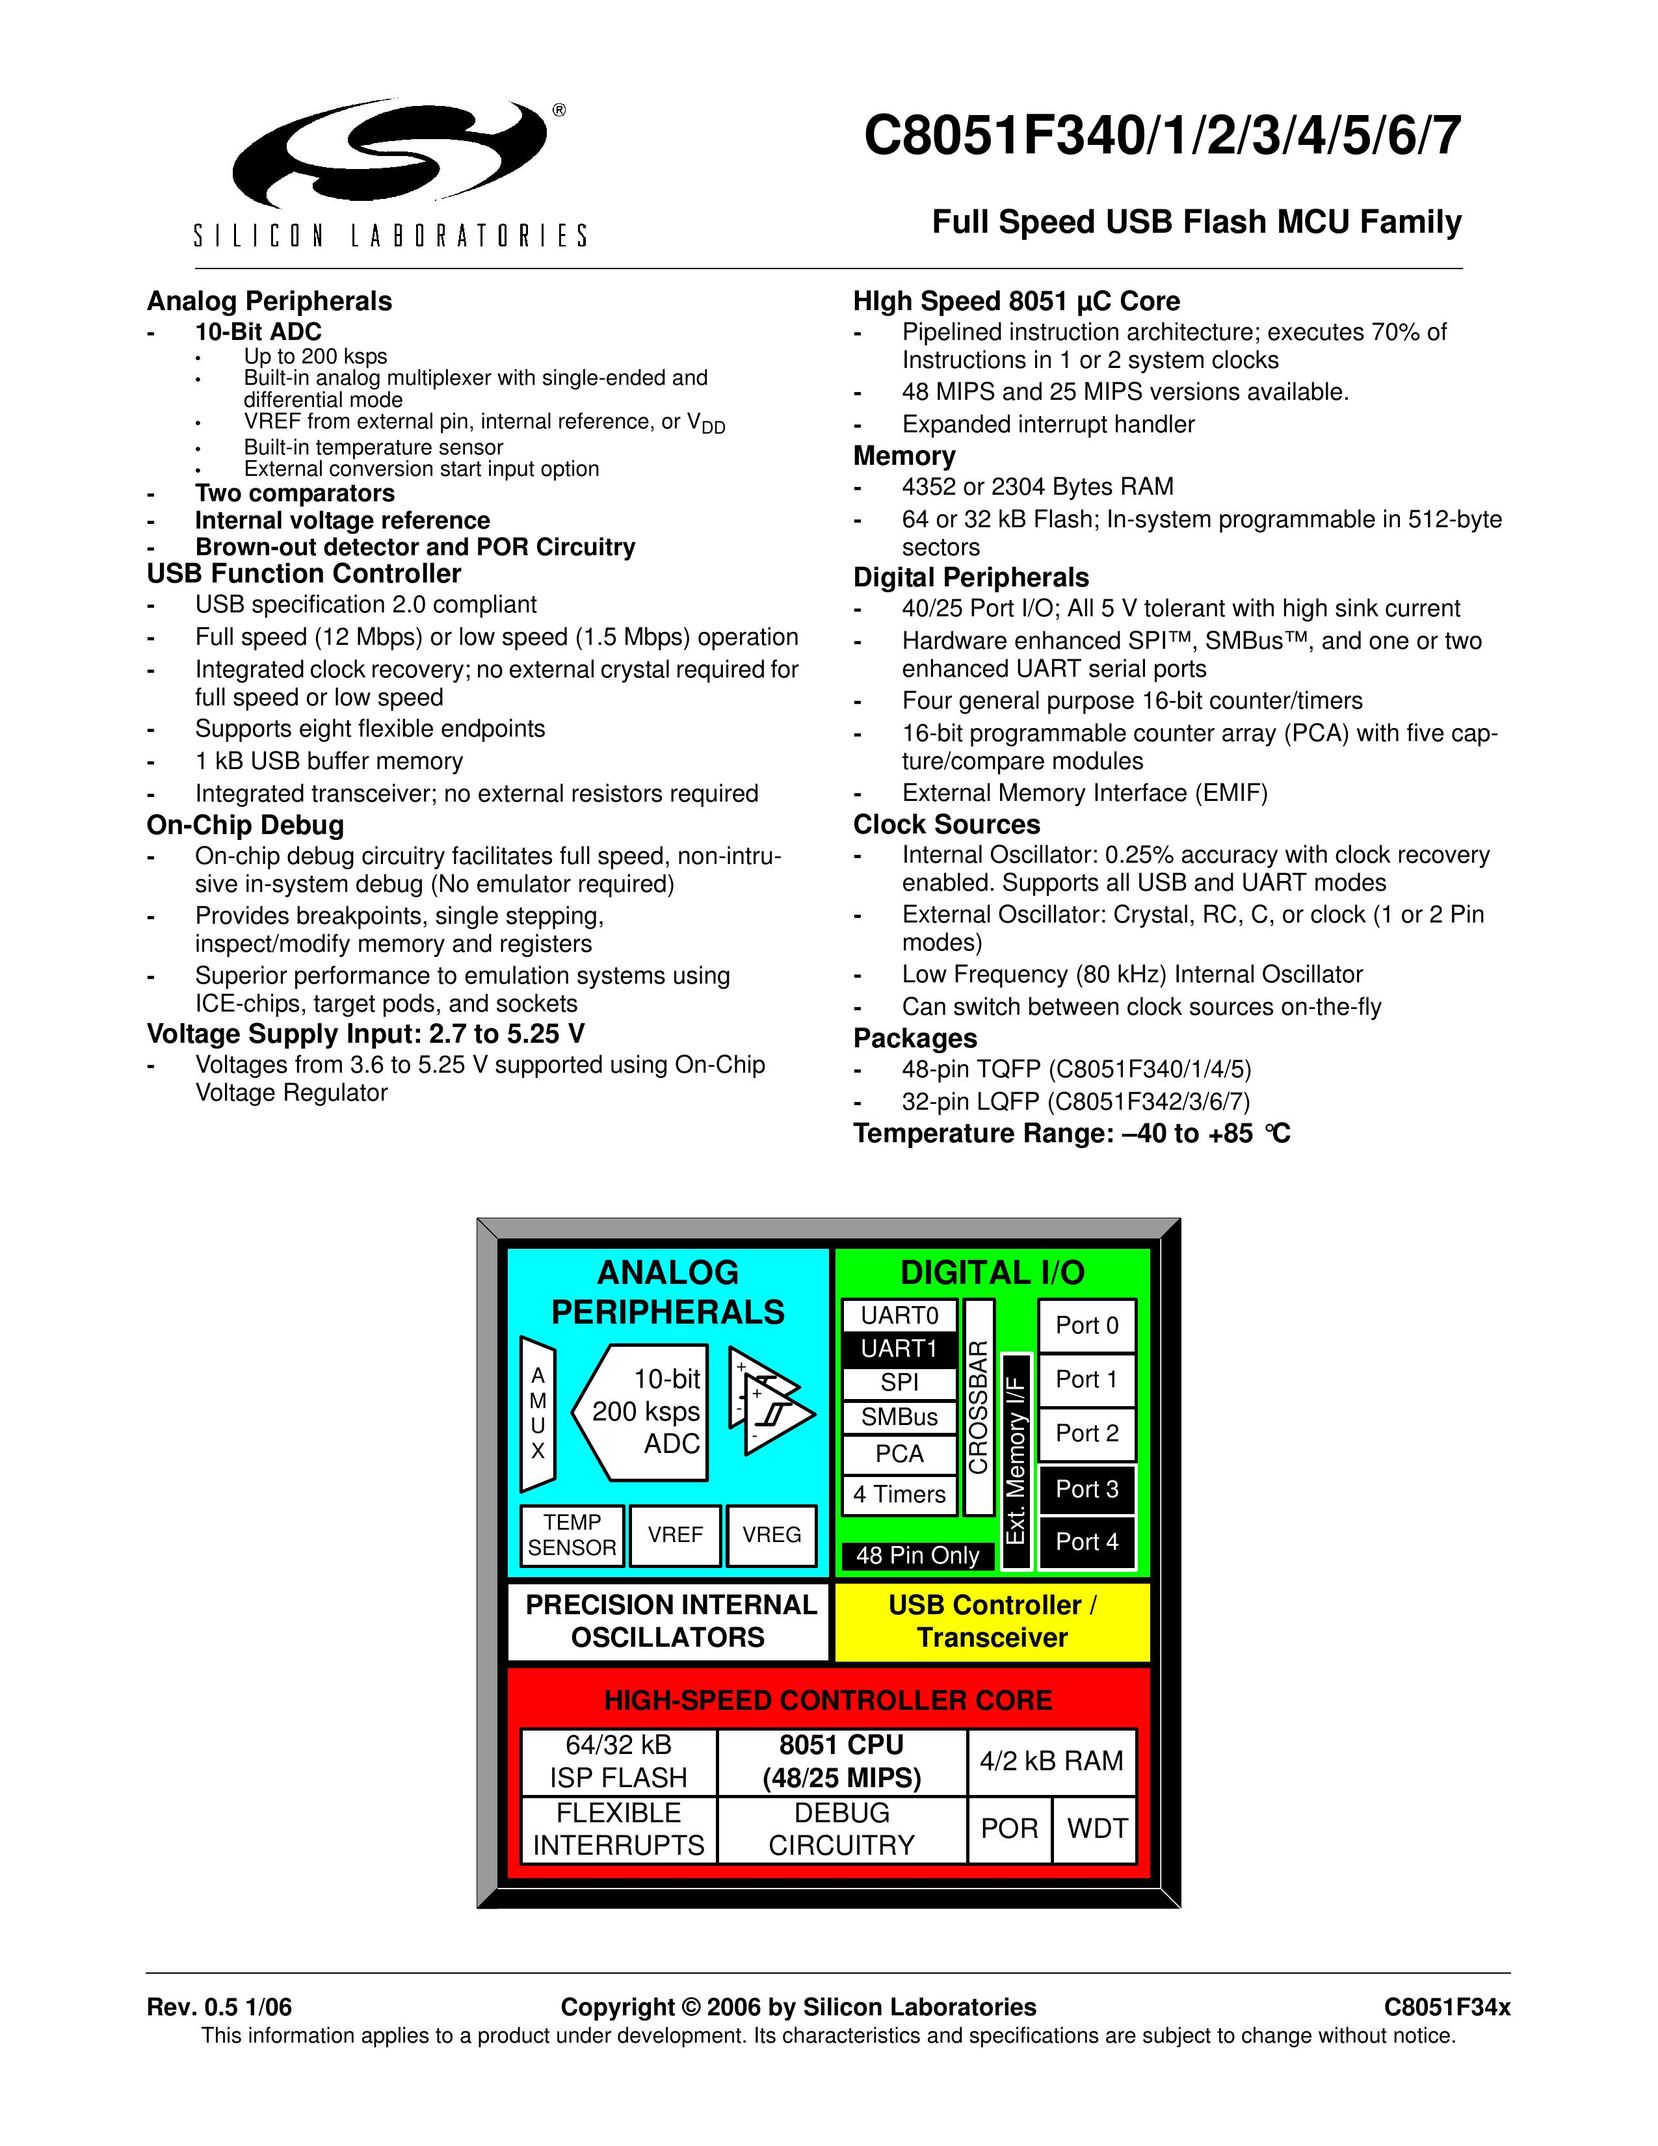 Silicon Laboratories C8051F346 Two-Way Radio User Manual